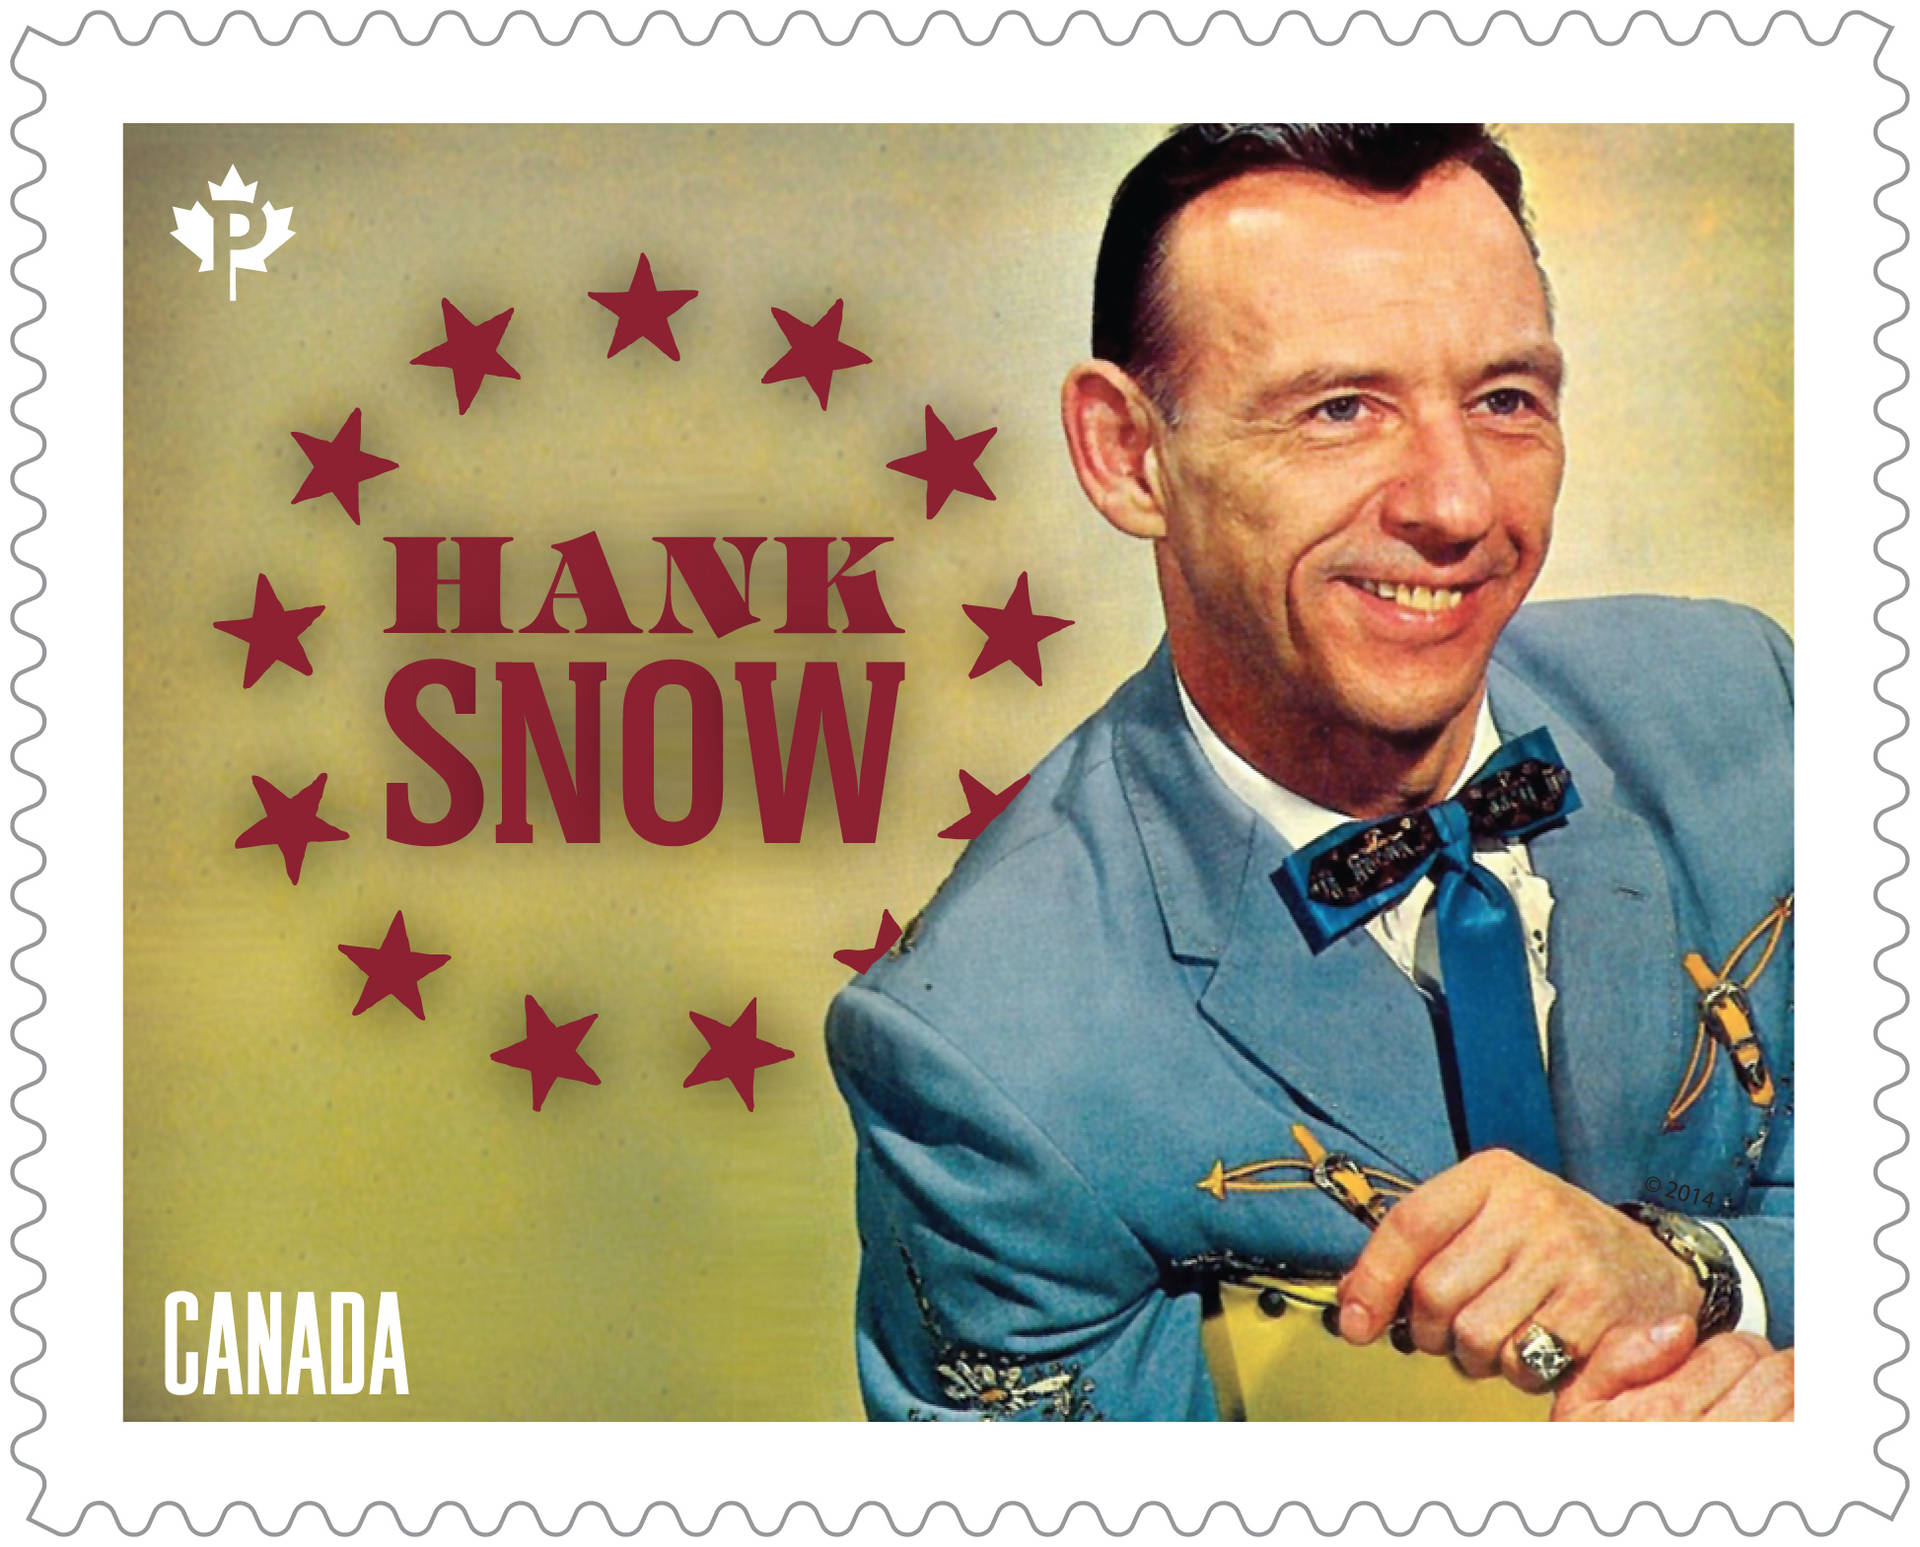 Hank Snow Letter Commemorative Stamp Wallpaper